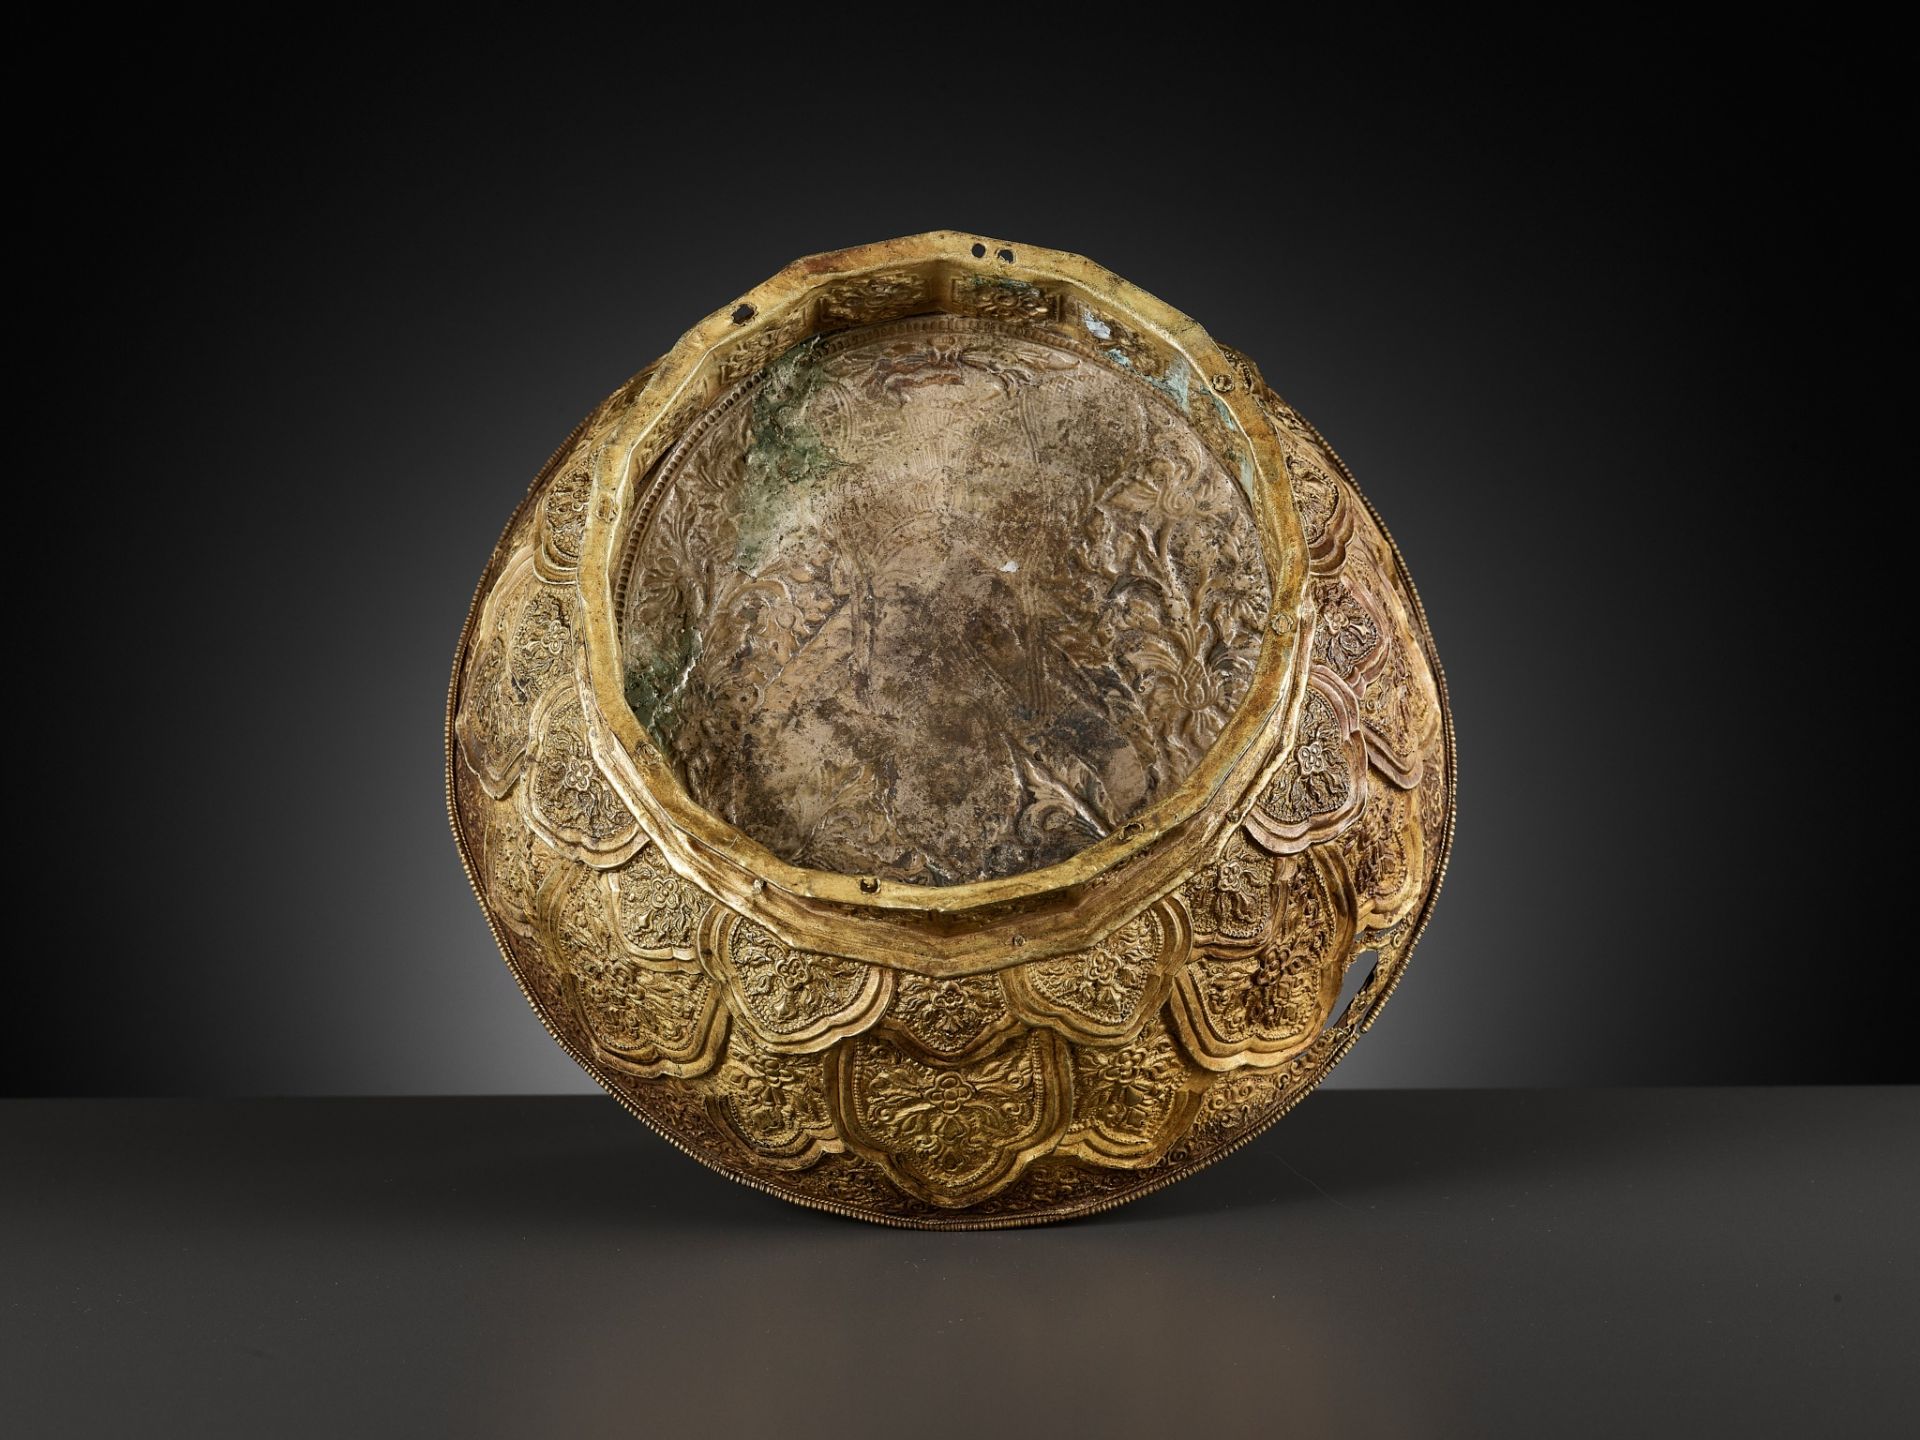 A SILVER-INLAID GOLD REPOUSSÉ BOWL DEPICTING GARUDA, VIETNAM,FORMER KINGDOMS OF CHAMPA,CIRCA 10TH C. - Image 18 of 18